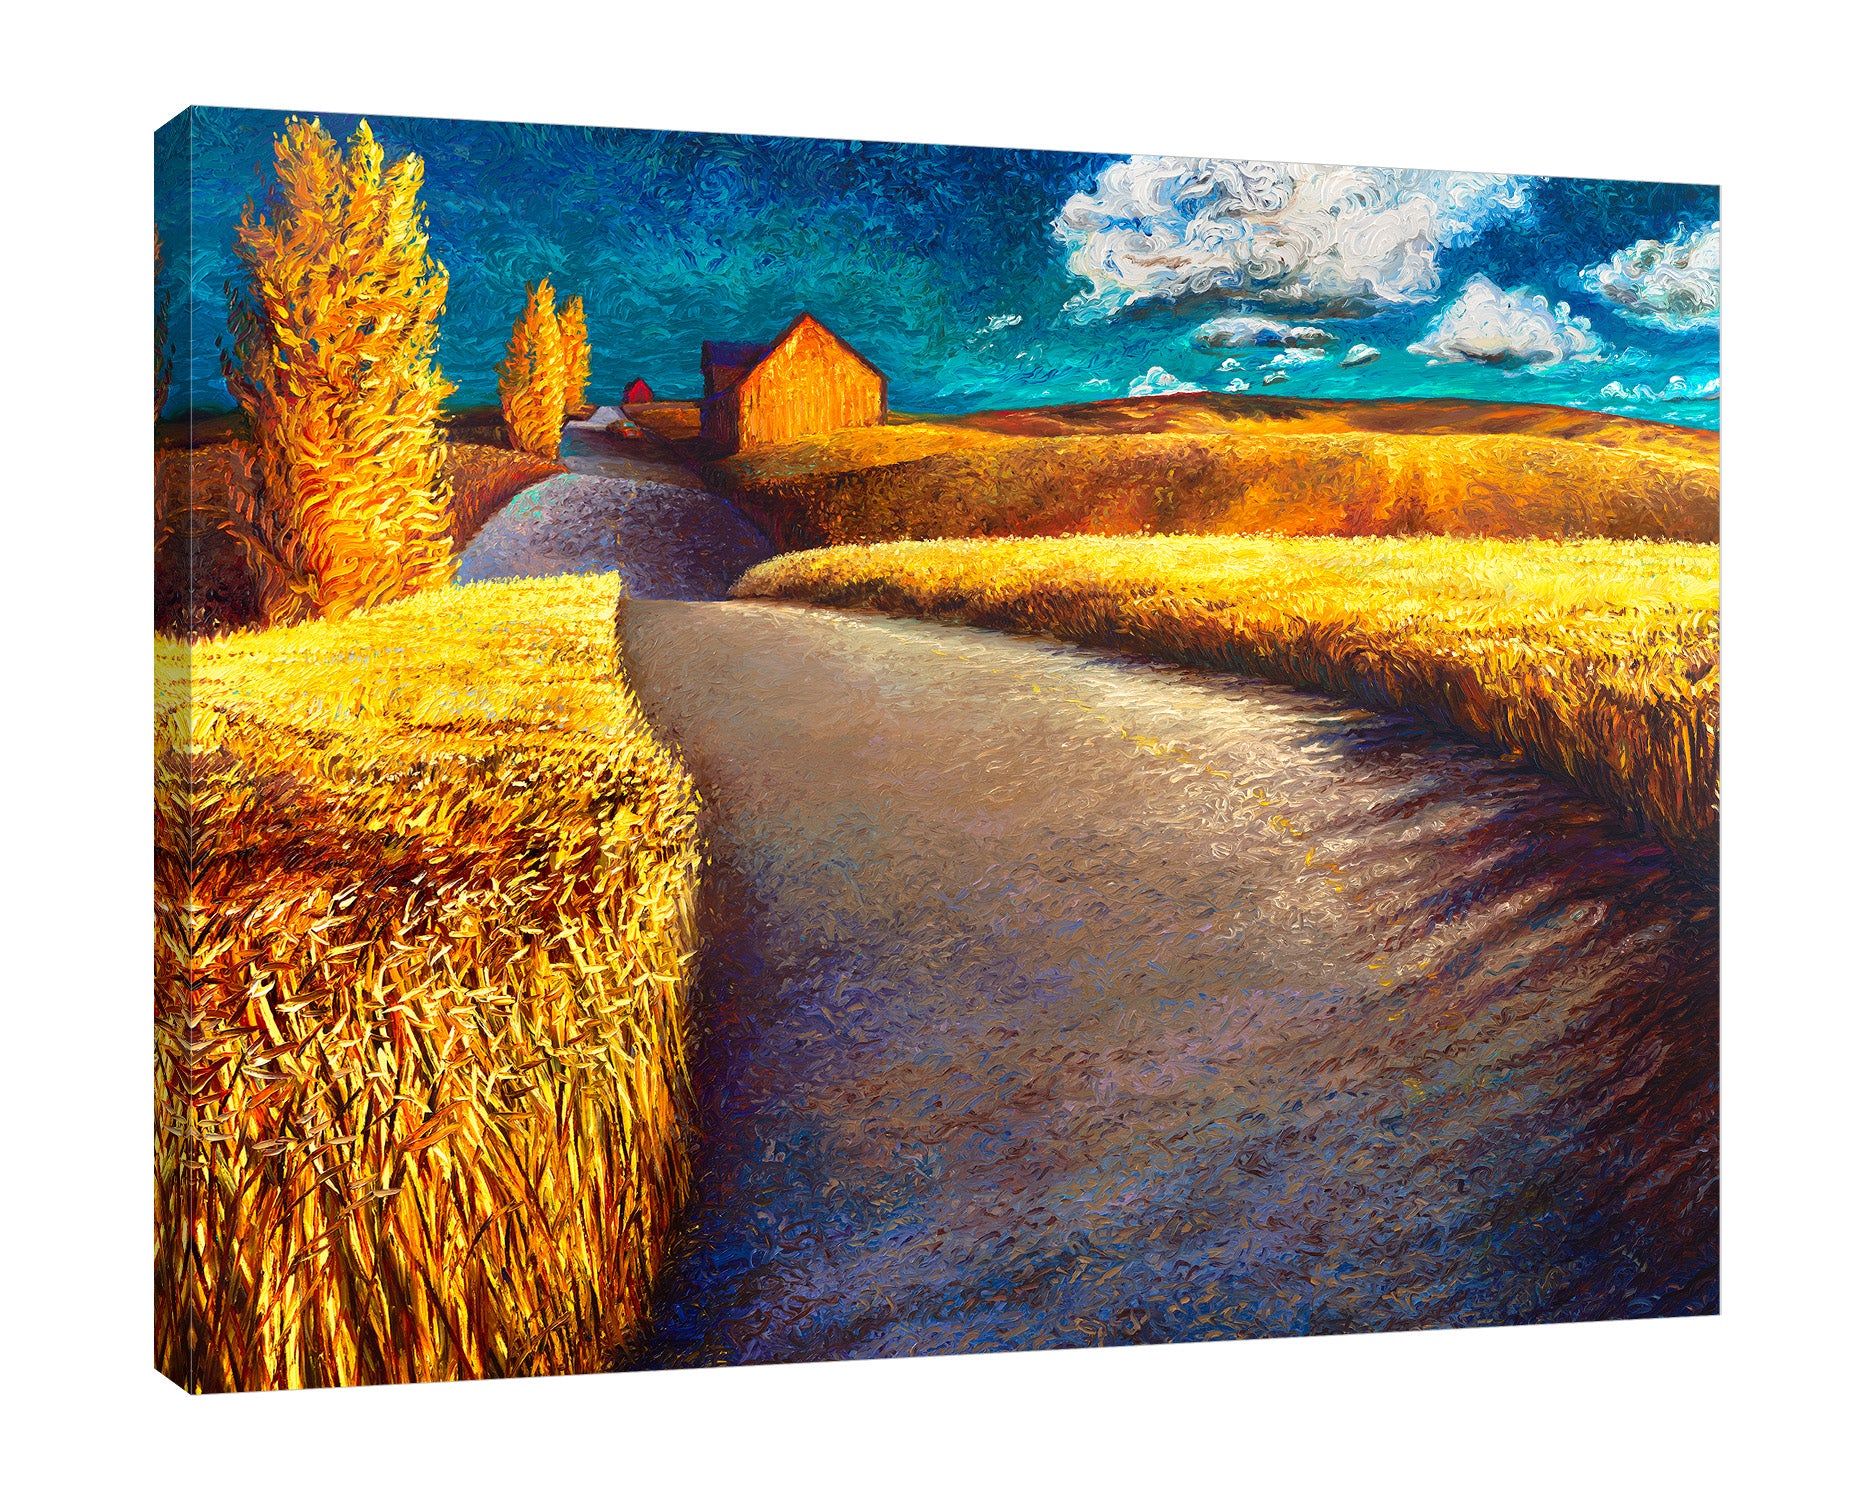 Iris-Scott,Modern & Contemporary,Landscape & Nature,wheats,clouds,barn,grains,